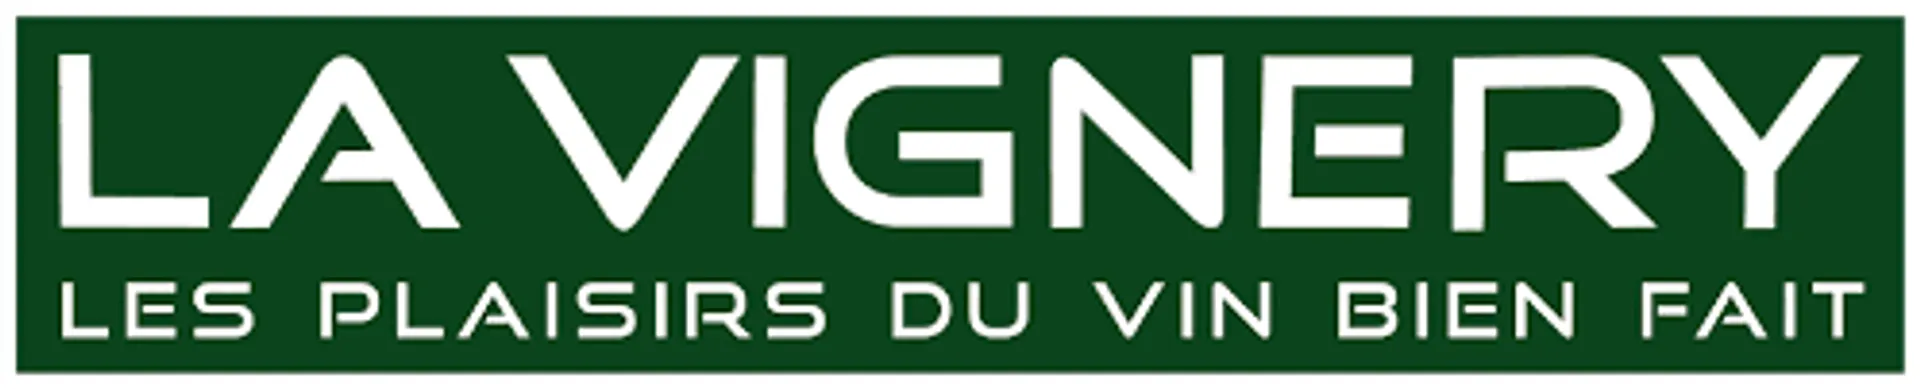 LA VIGNERY logo du catalogue